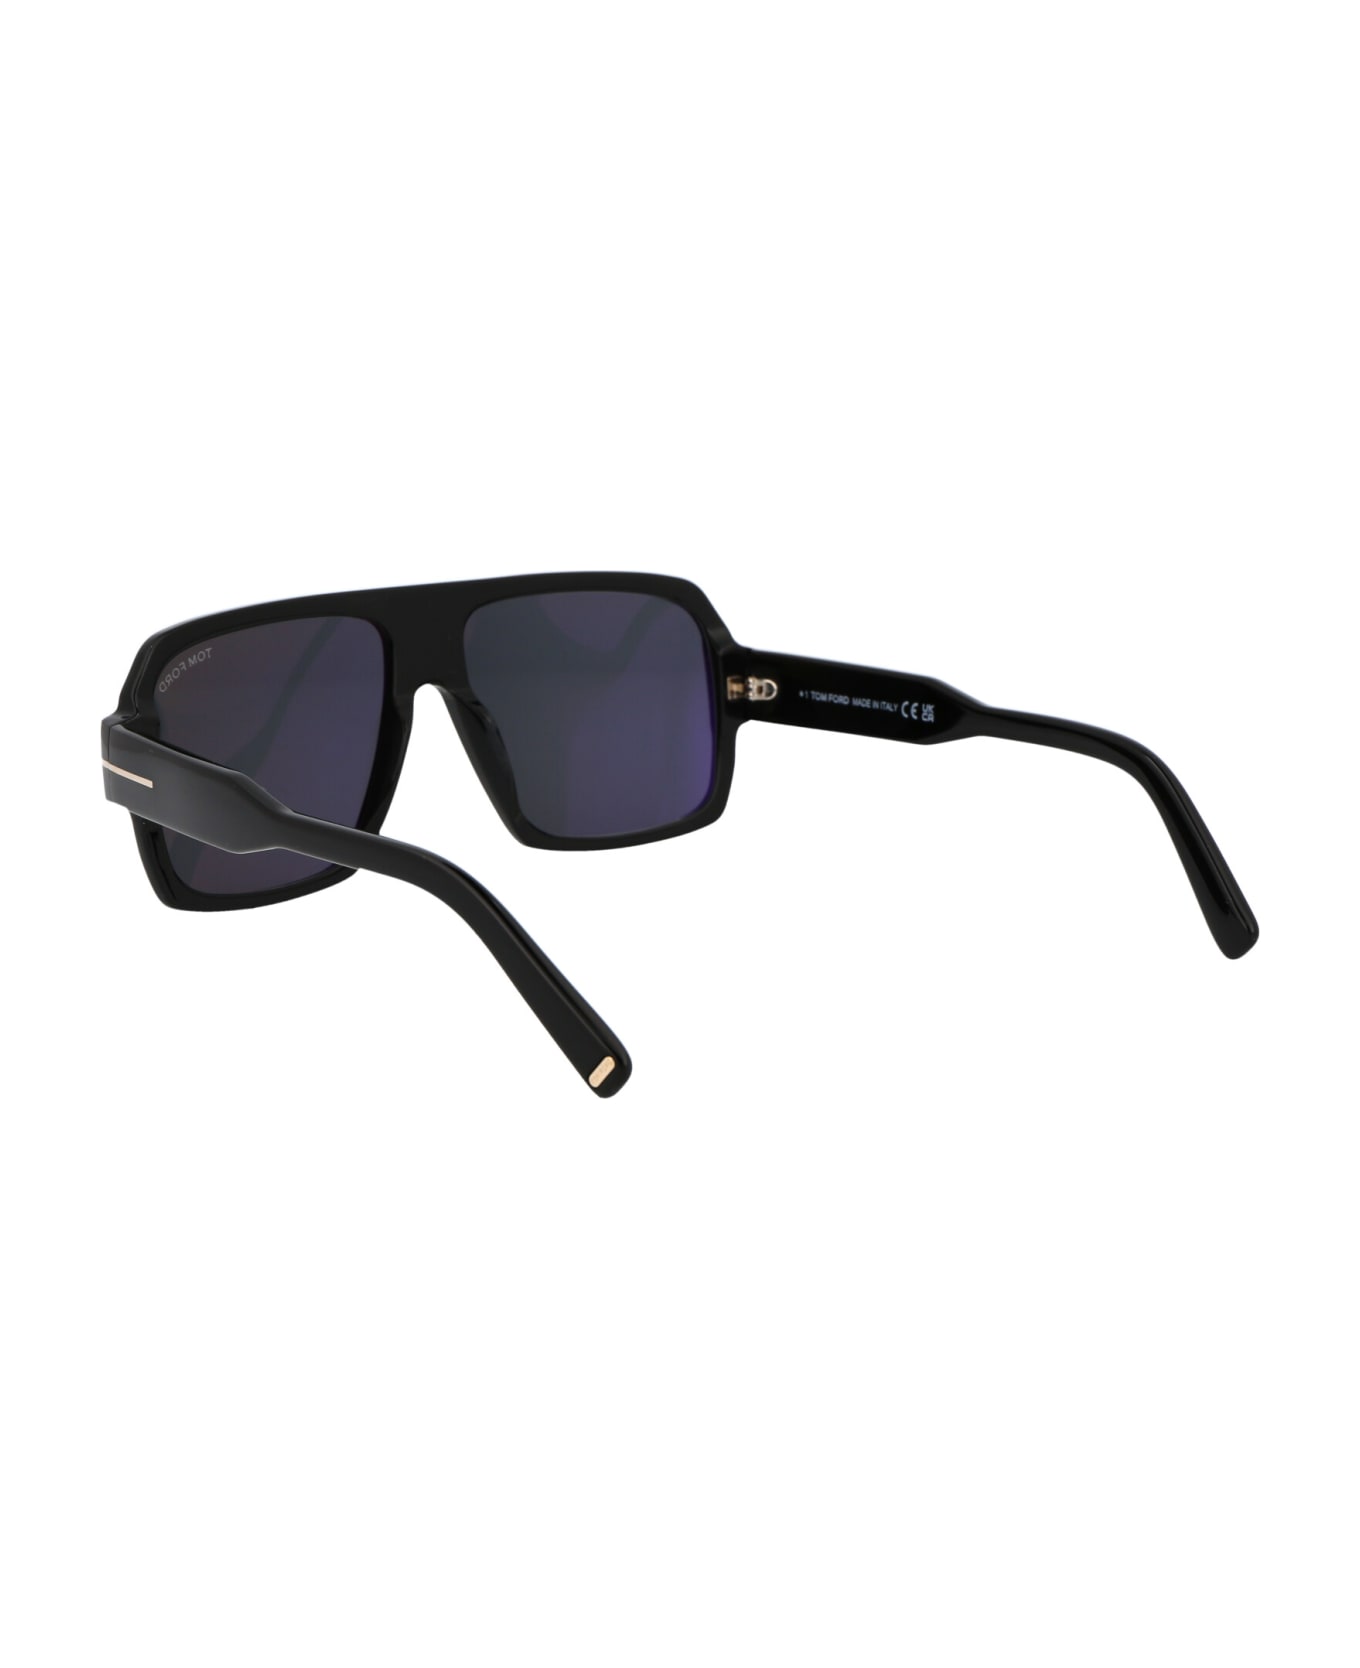 Tom Ford Eyewear Camden Sunglasses - 01A Nero Lucido / Fumo